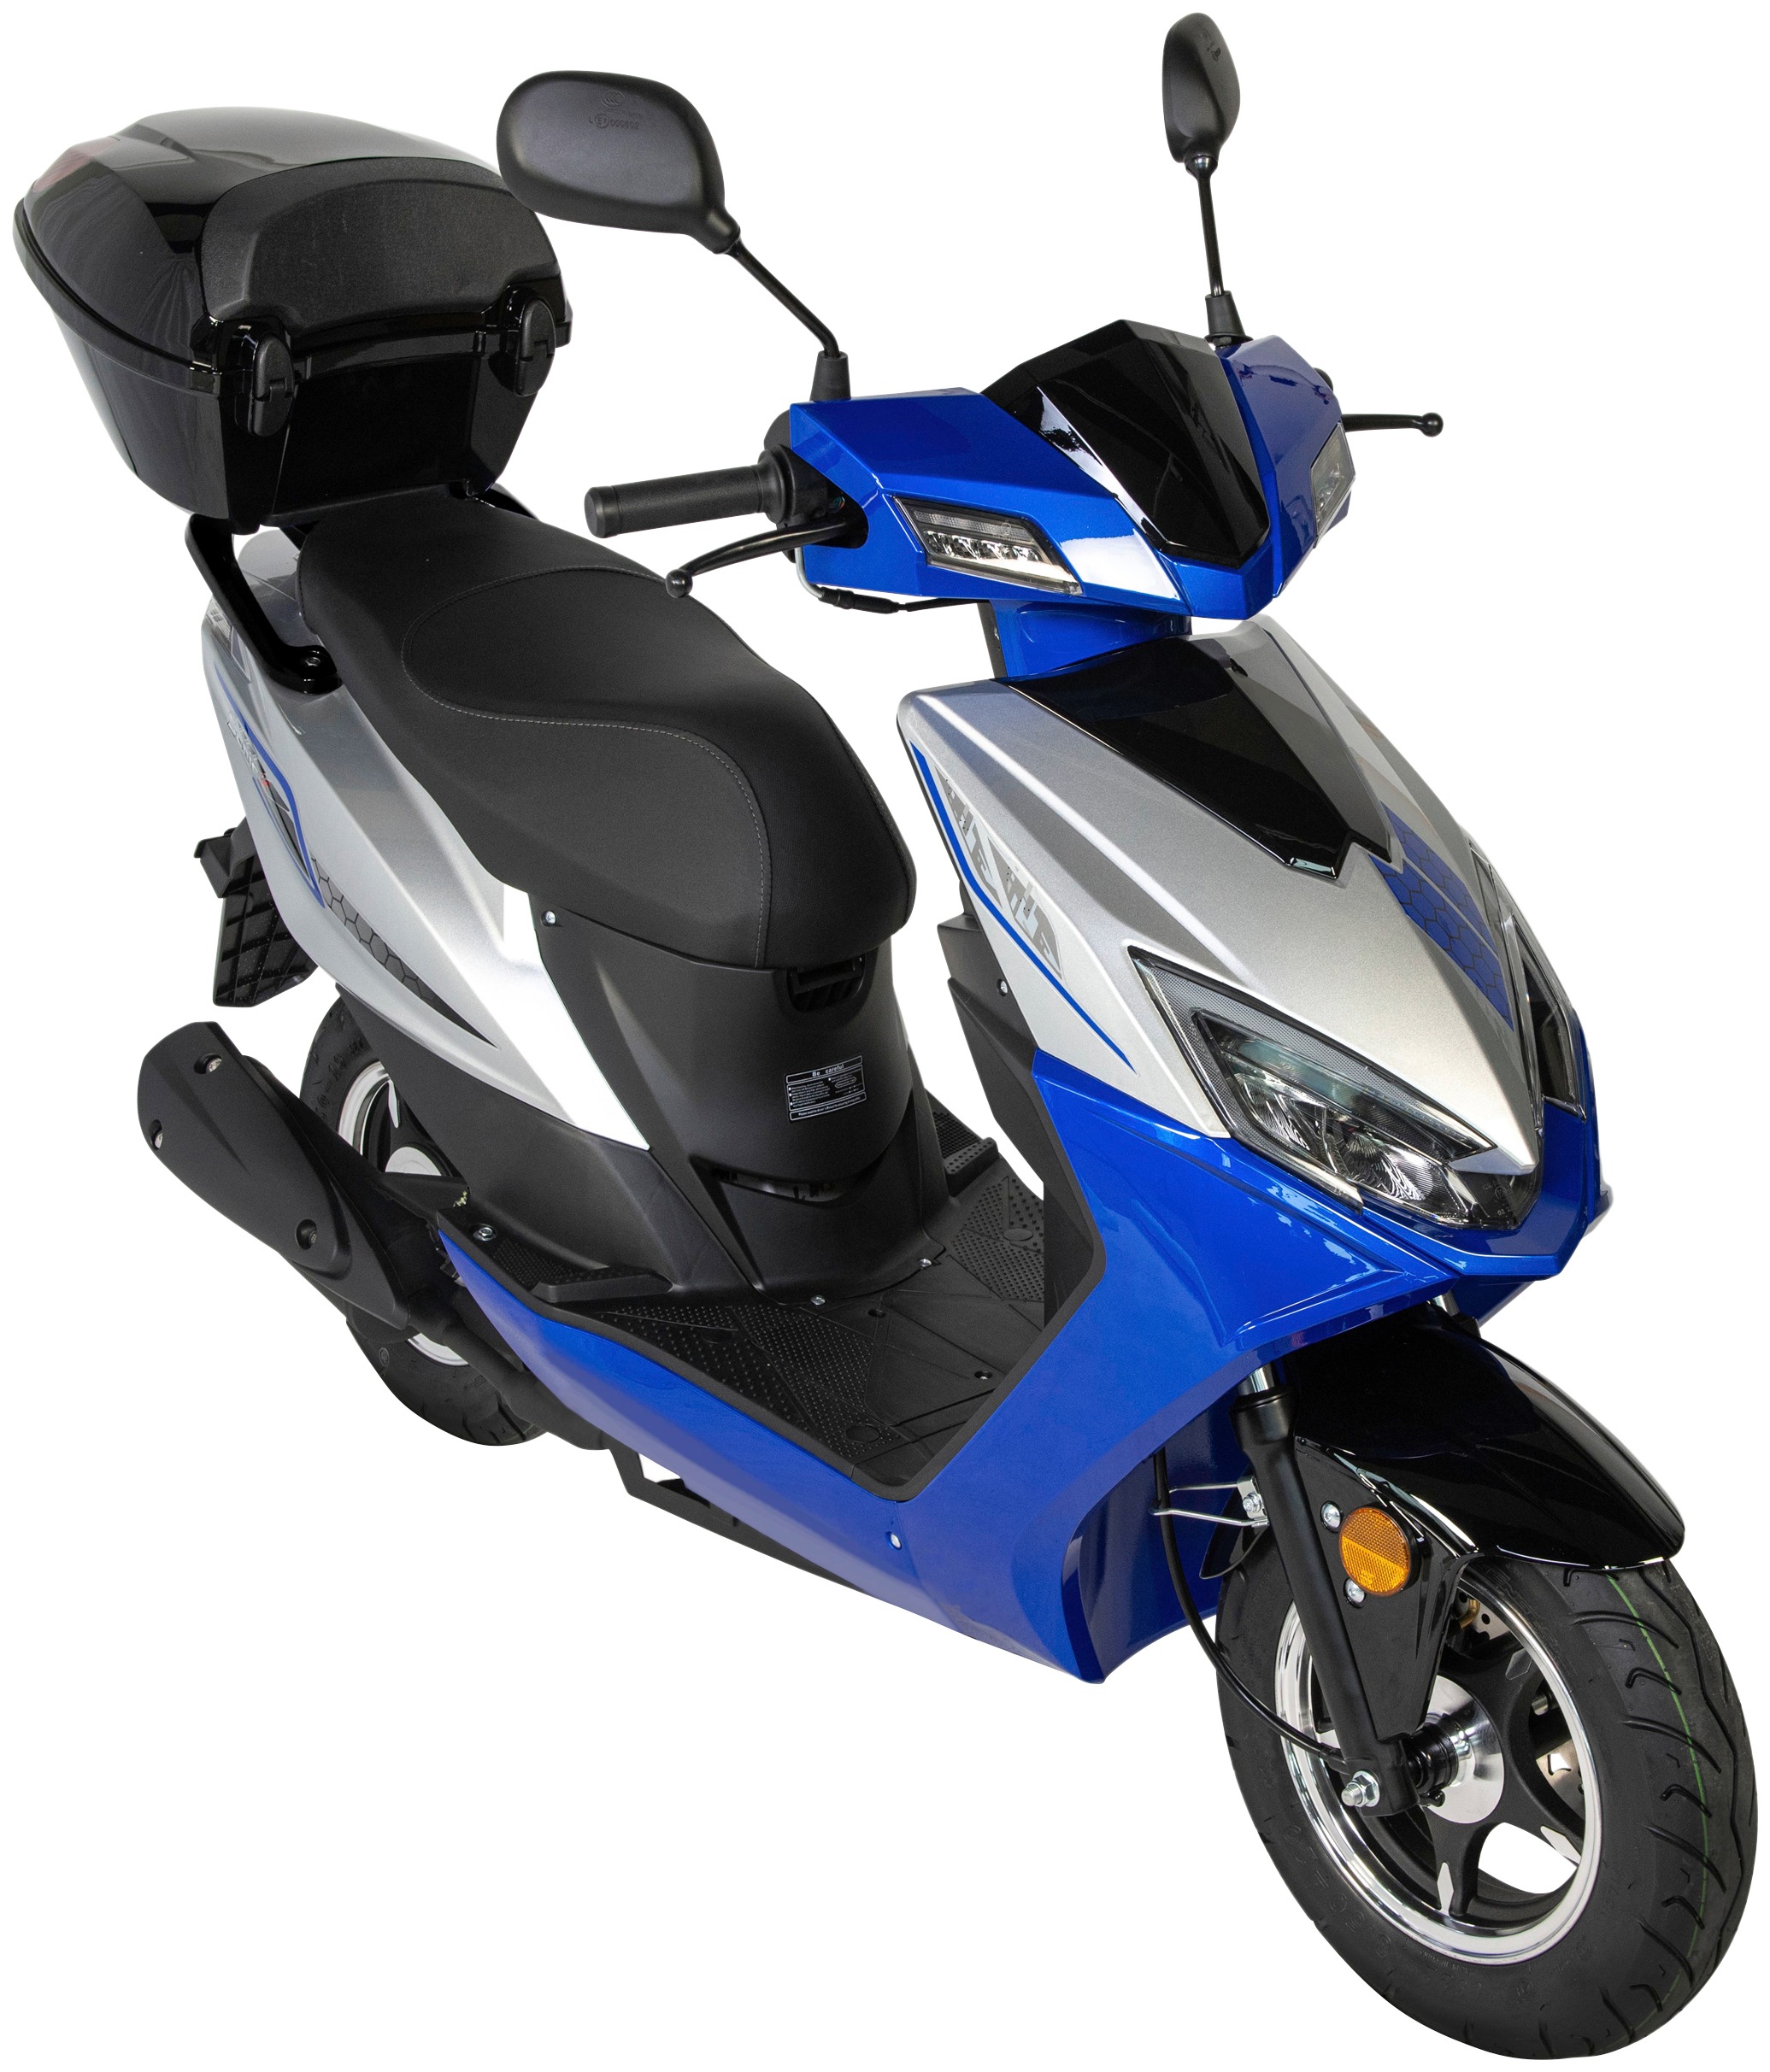 GT UNION Motorroller »PX 55 Cross-Concept«, 50 cm³, 45 km/h, Euro 5, 3 PS